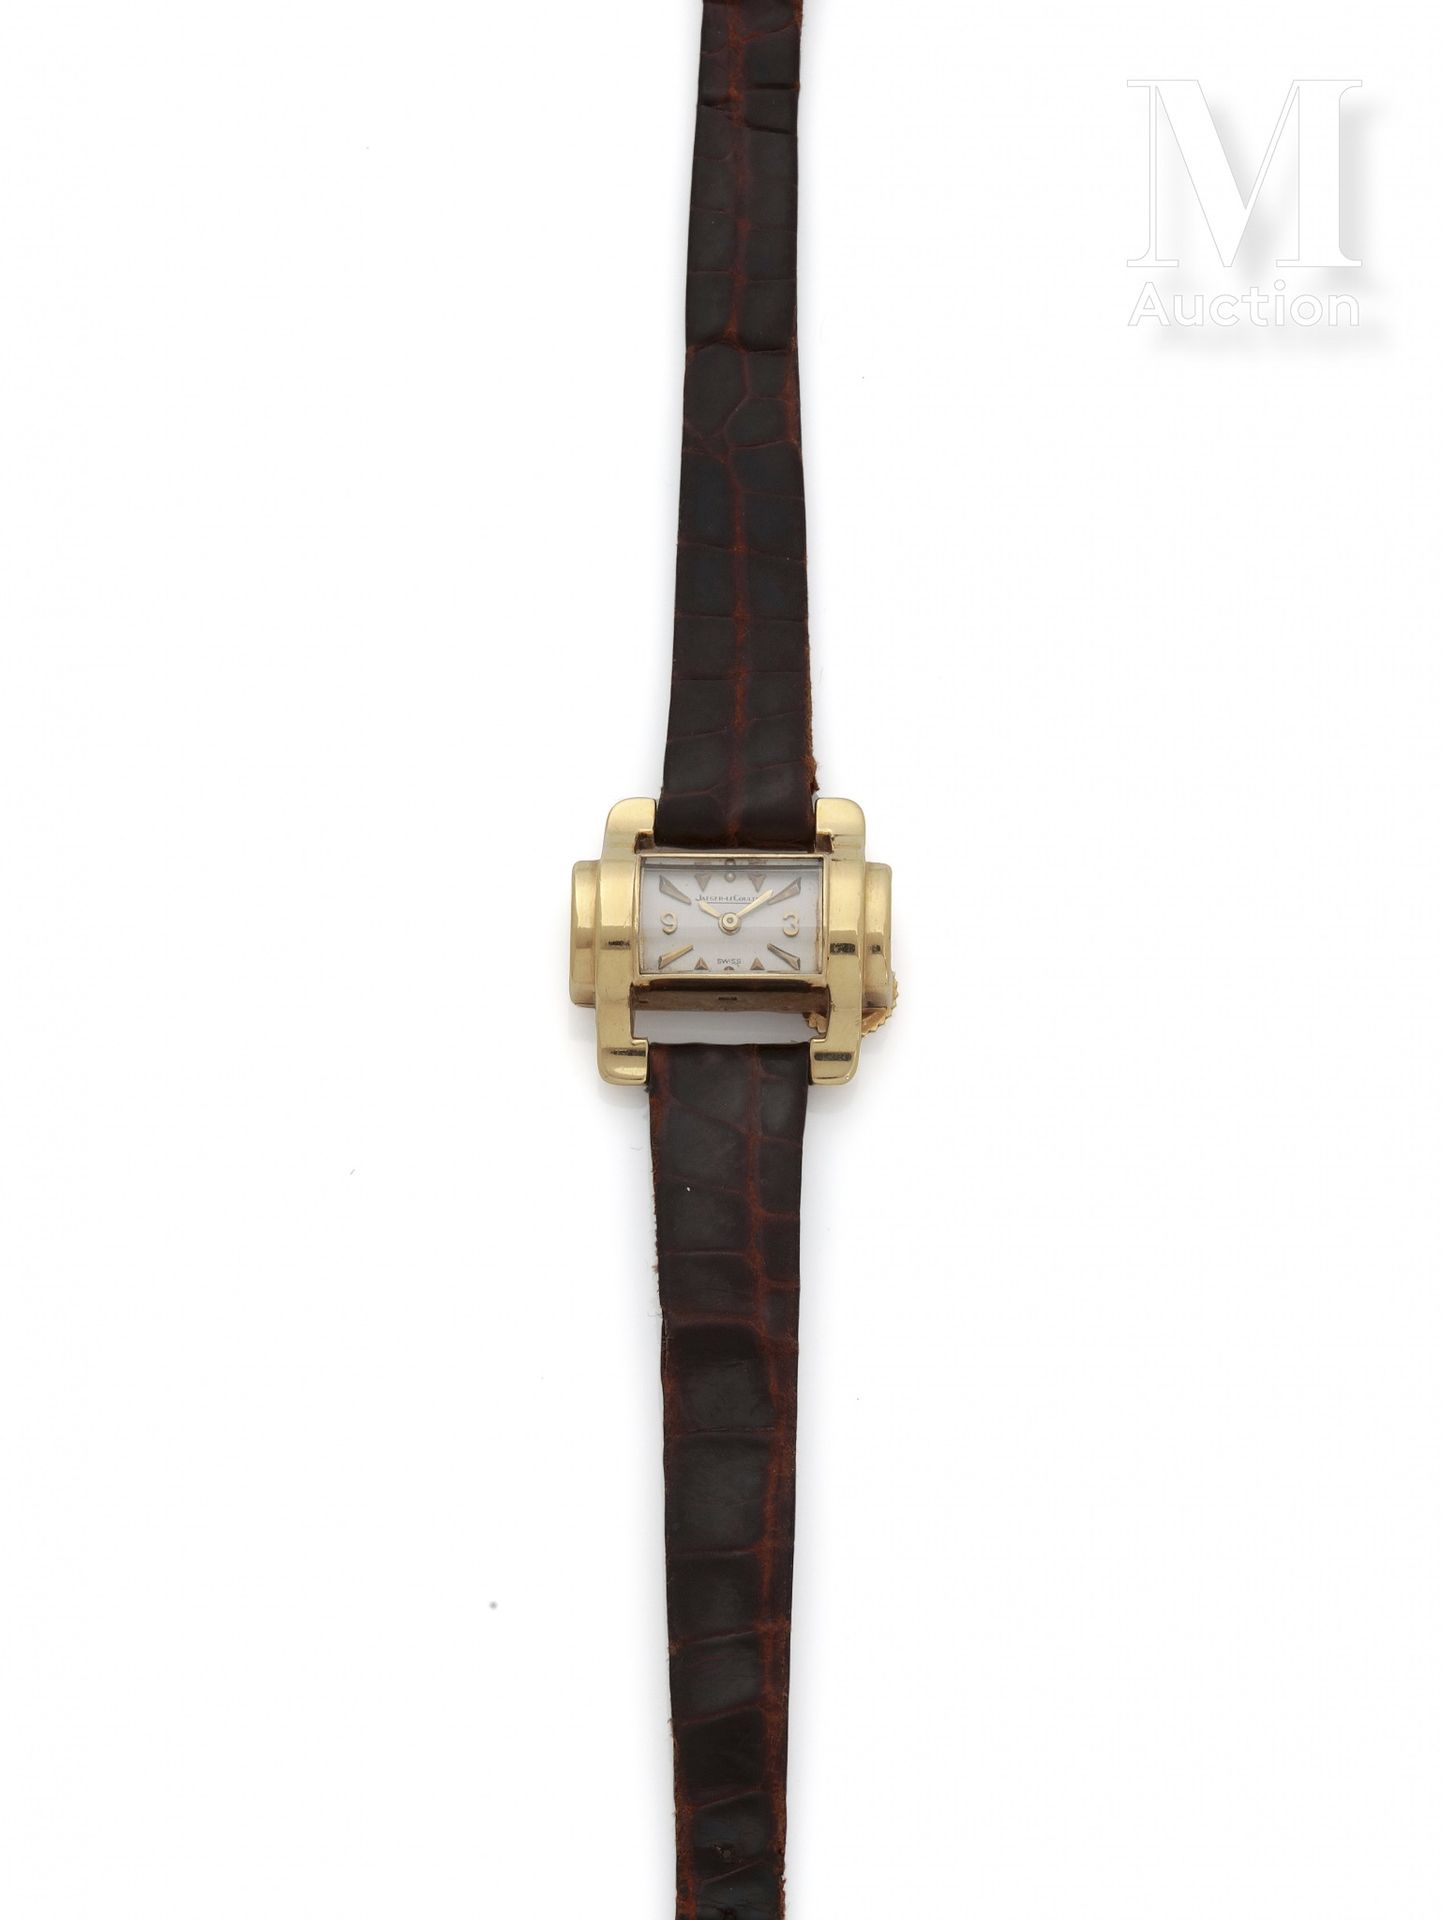 JAEGER-LECOULTRE 非常罕见的女式手表

被称为 "tuile "的二元模式

约1930年

18K金表壳

手动上弦机械机芯

签署的运动

&hellip;